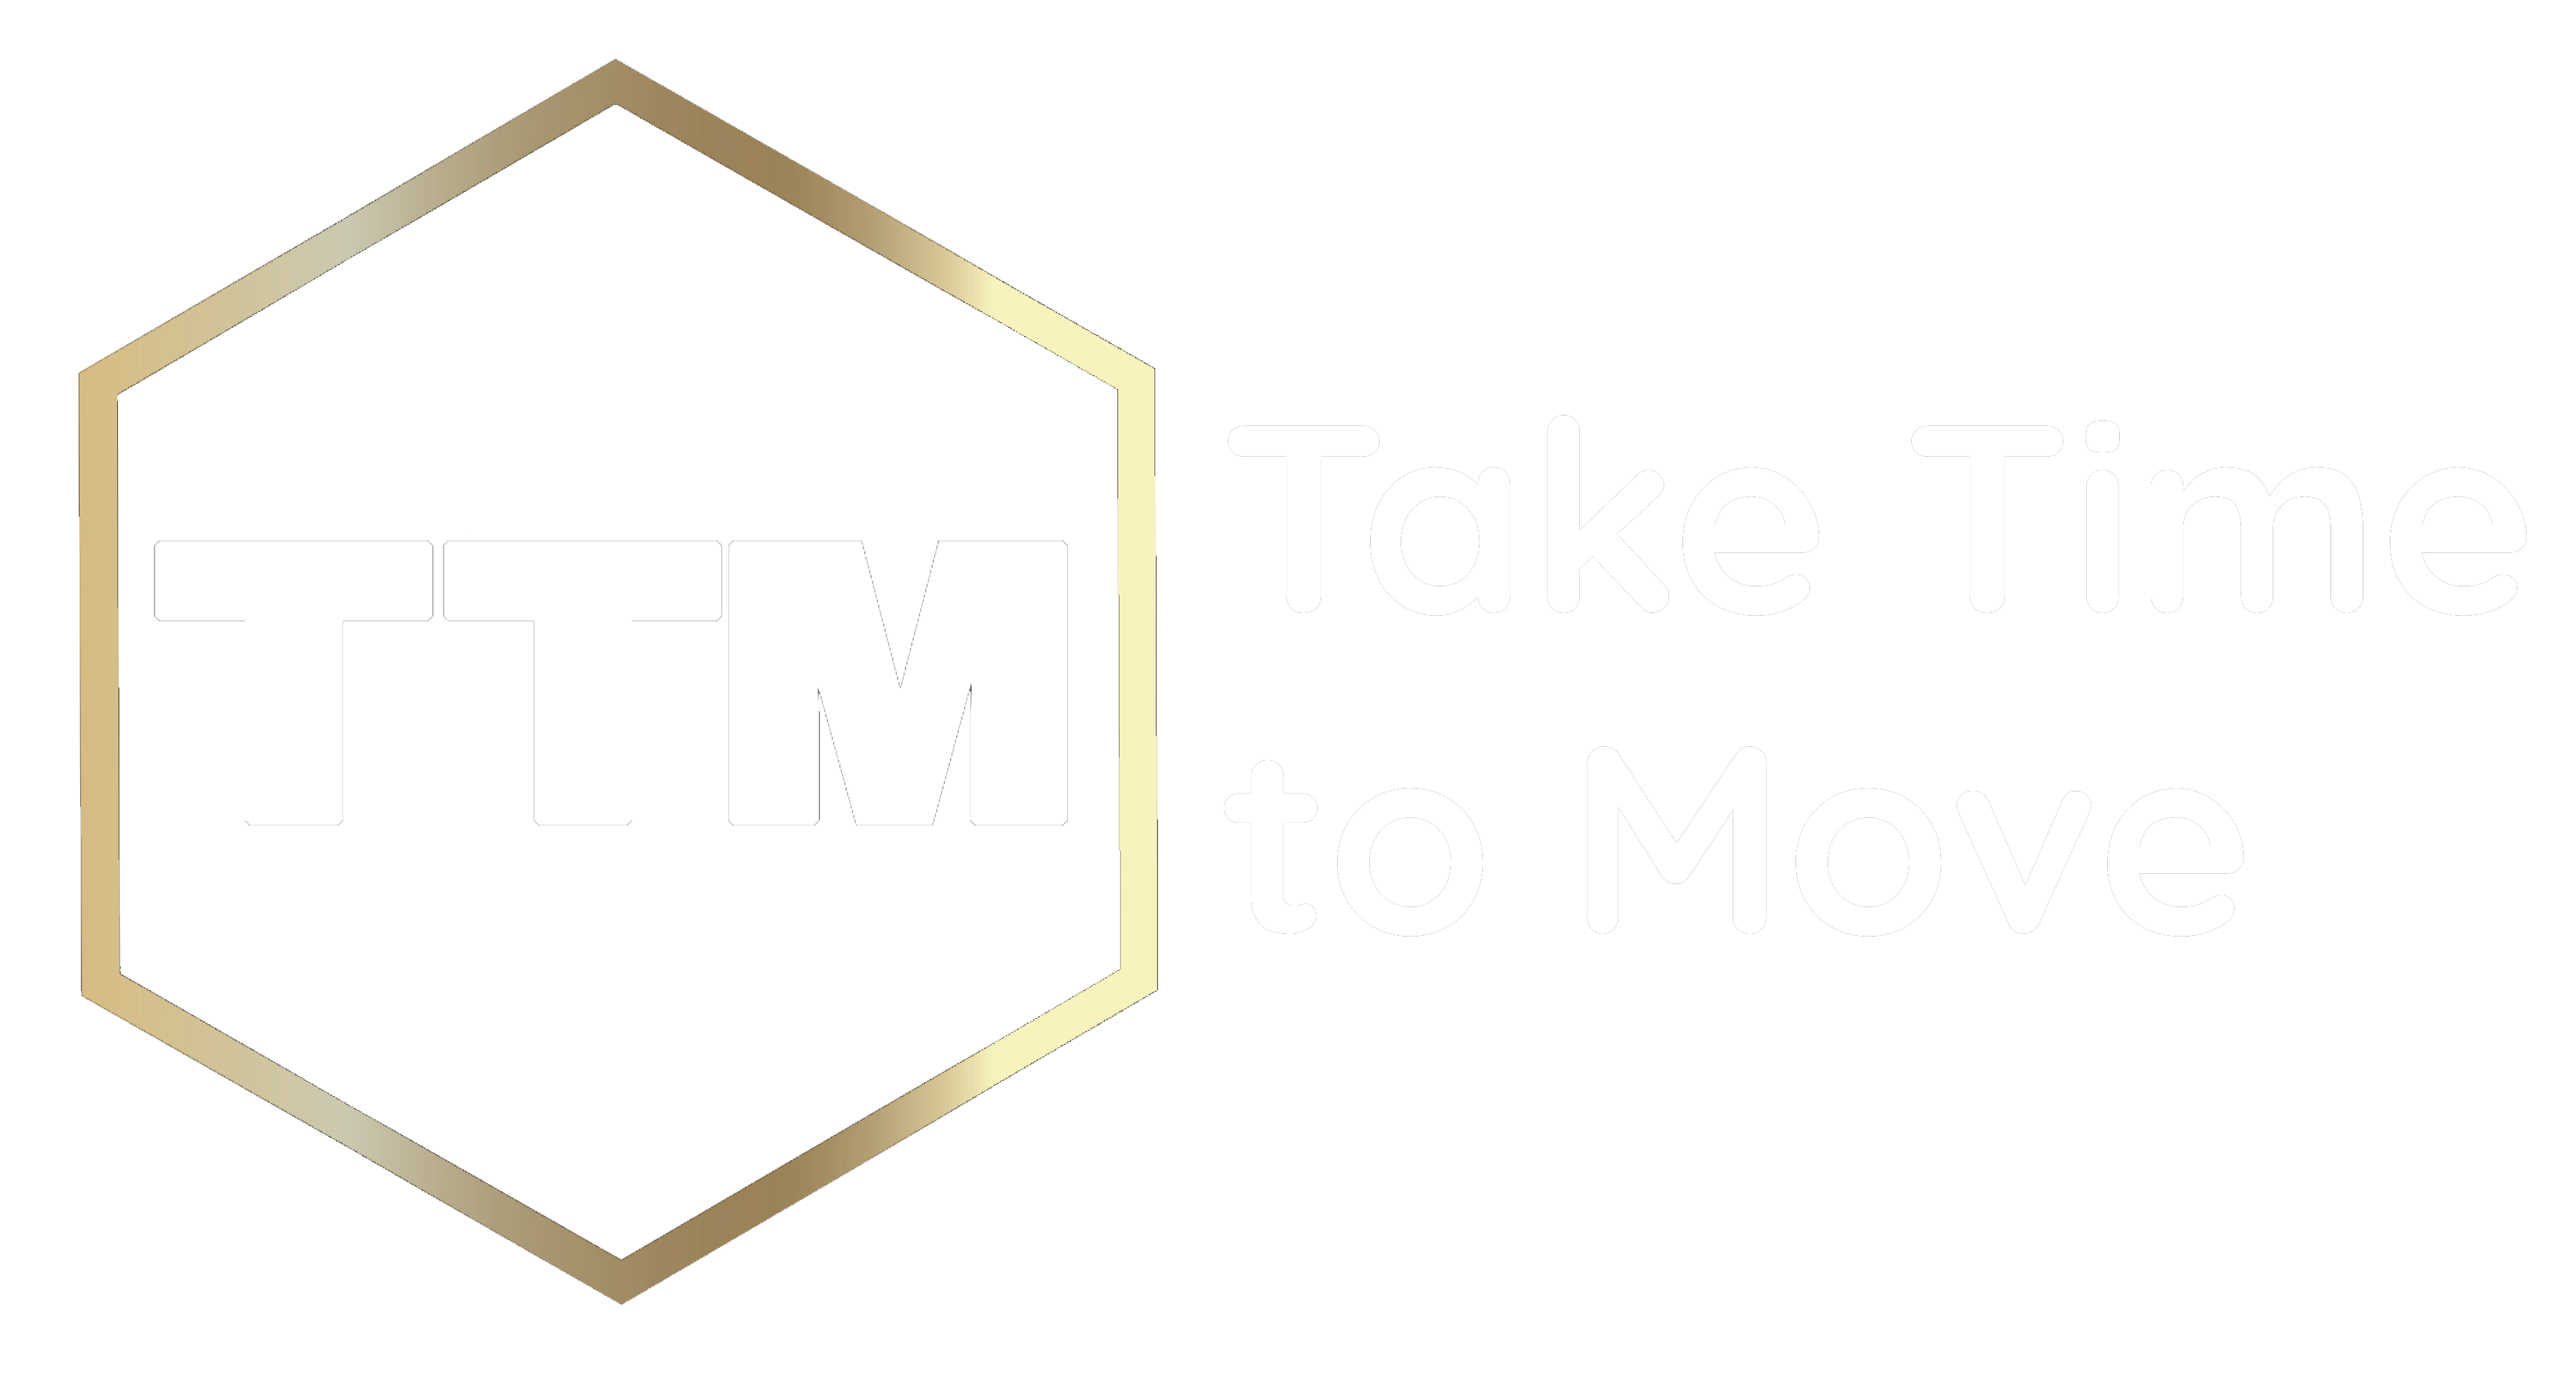 Take Time to Move